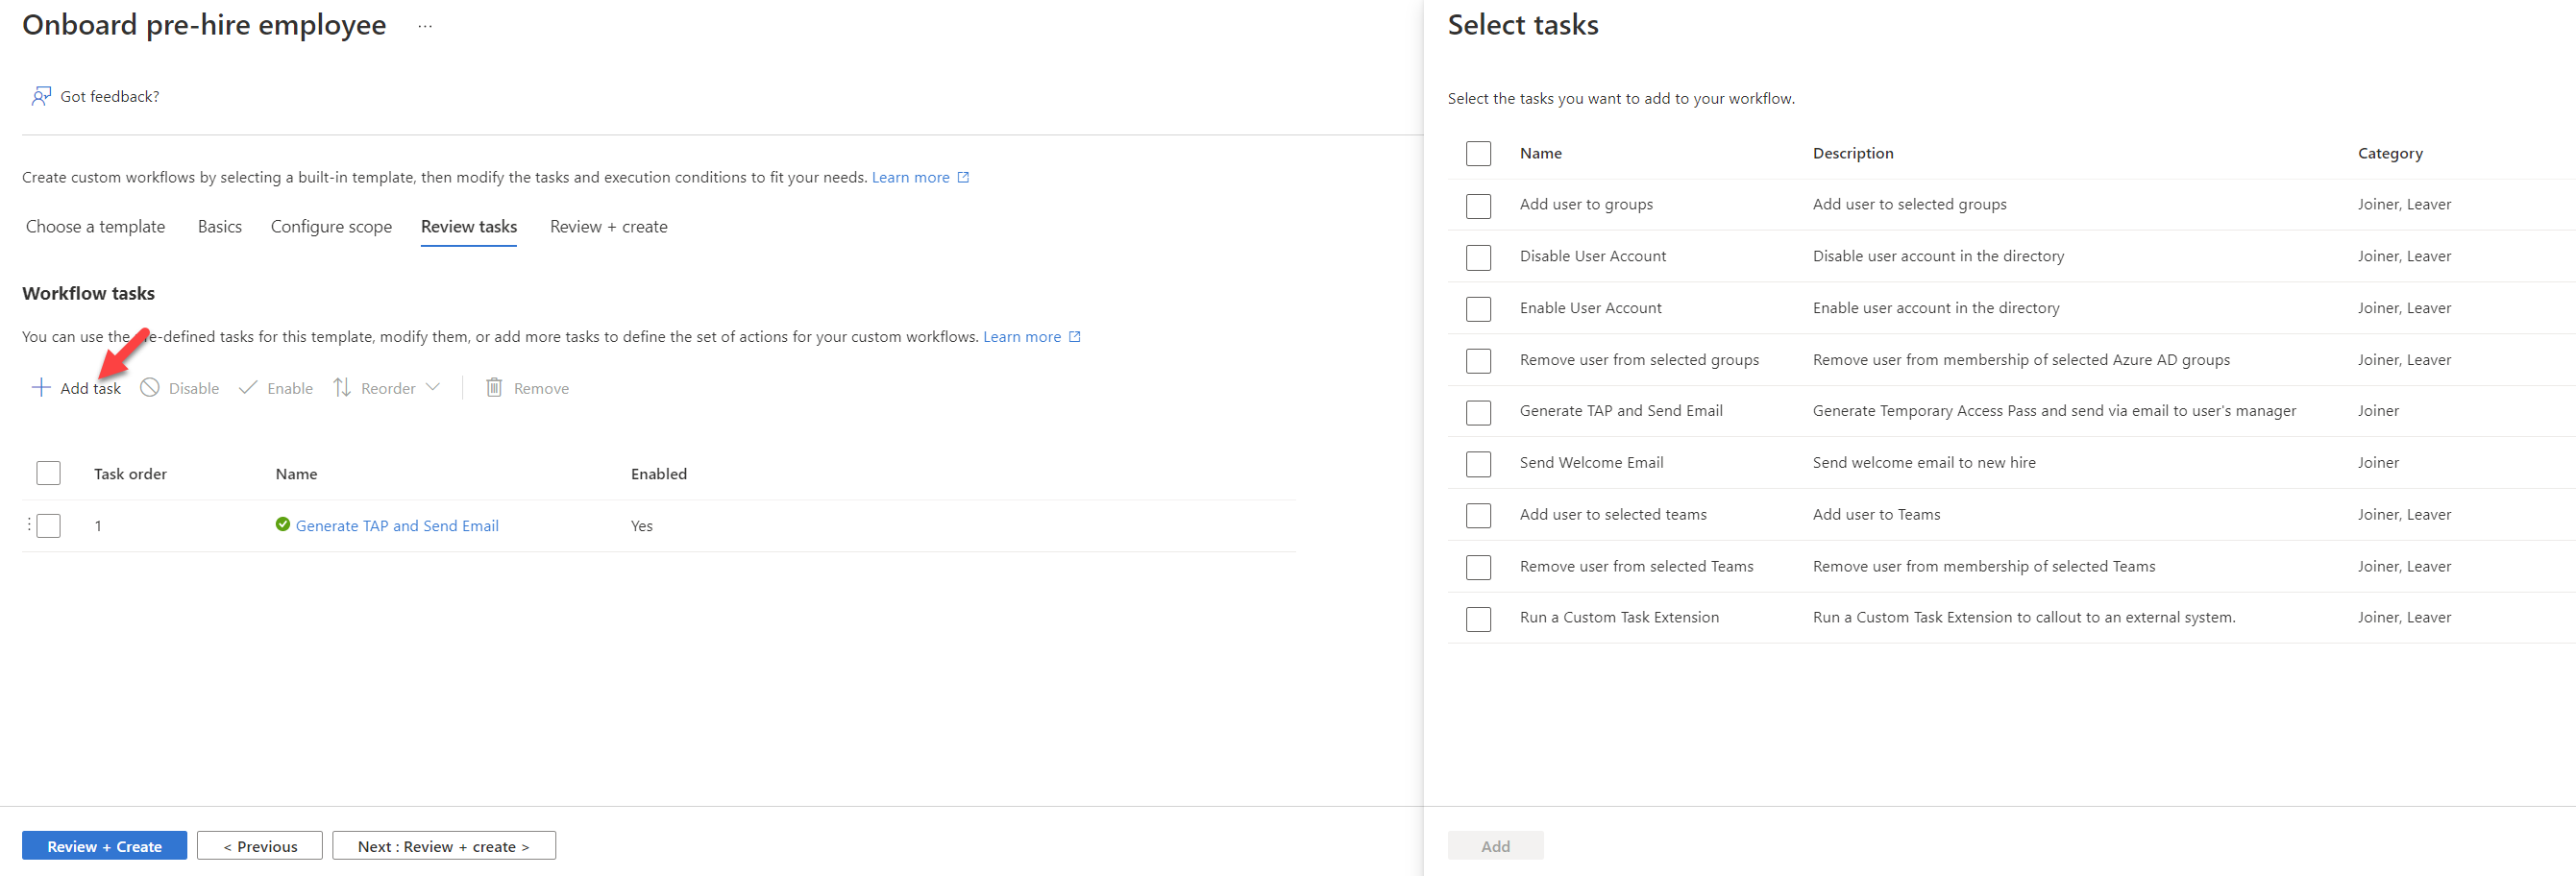 Adding Microsoft Entra lifecycle workflow tasks